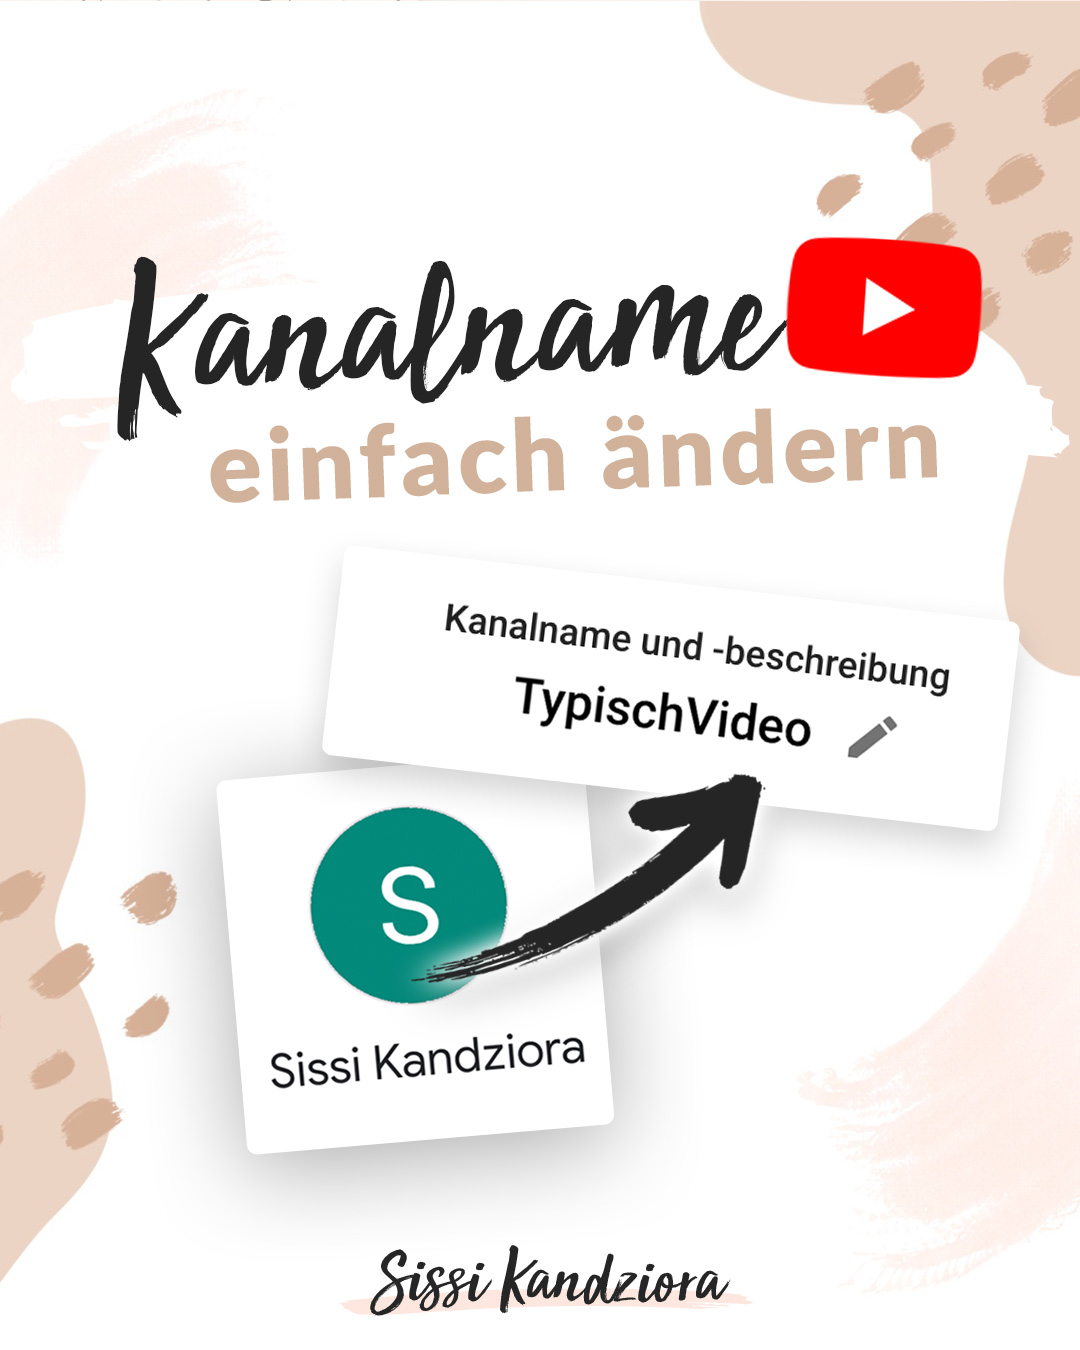 YouTube Kanal Name ändern